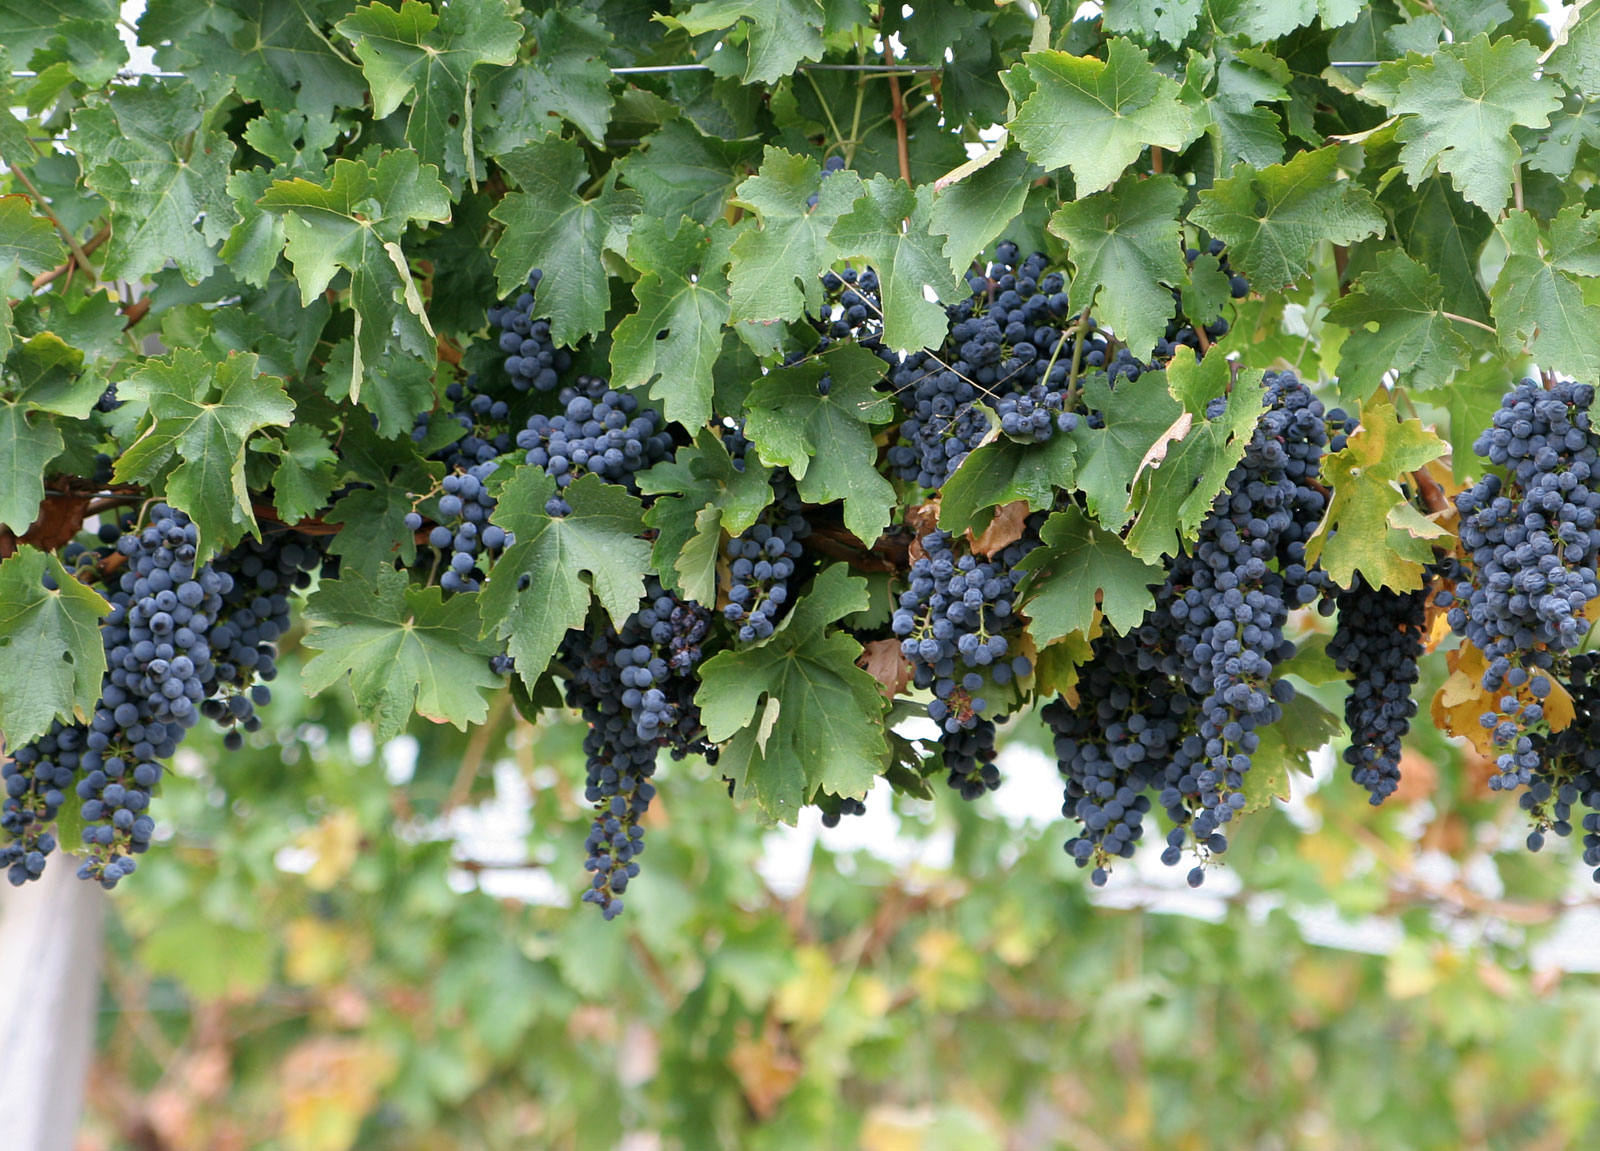 hd grapes plant images